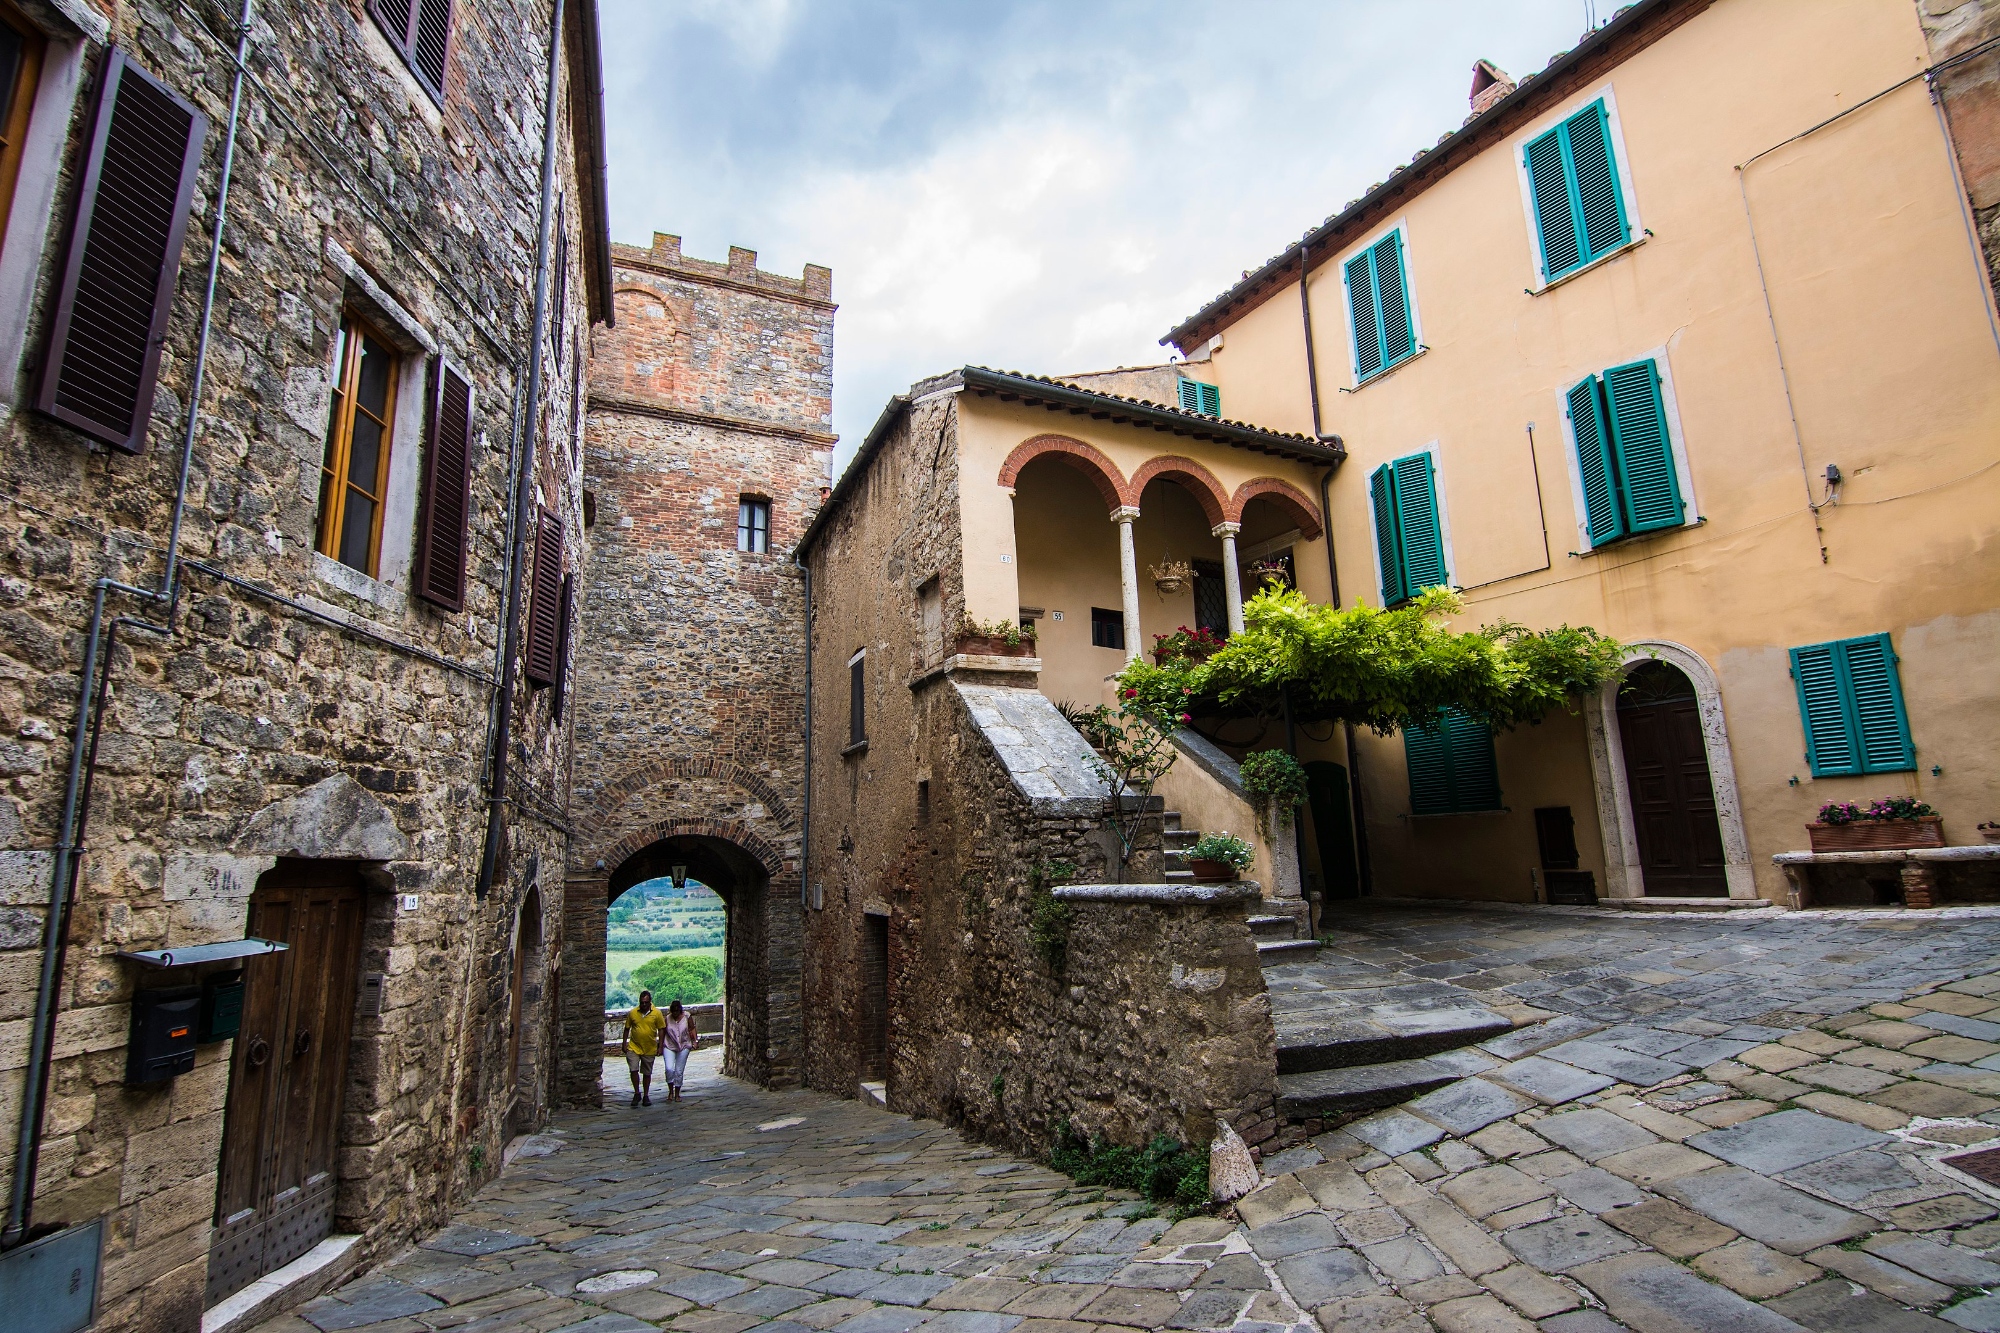 Tintori gate in Rapolano Terme